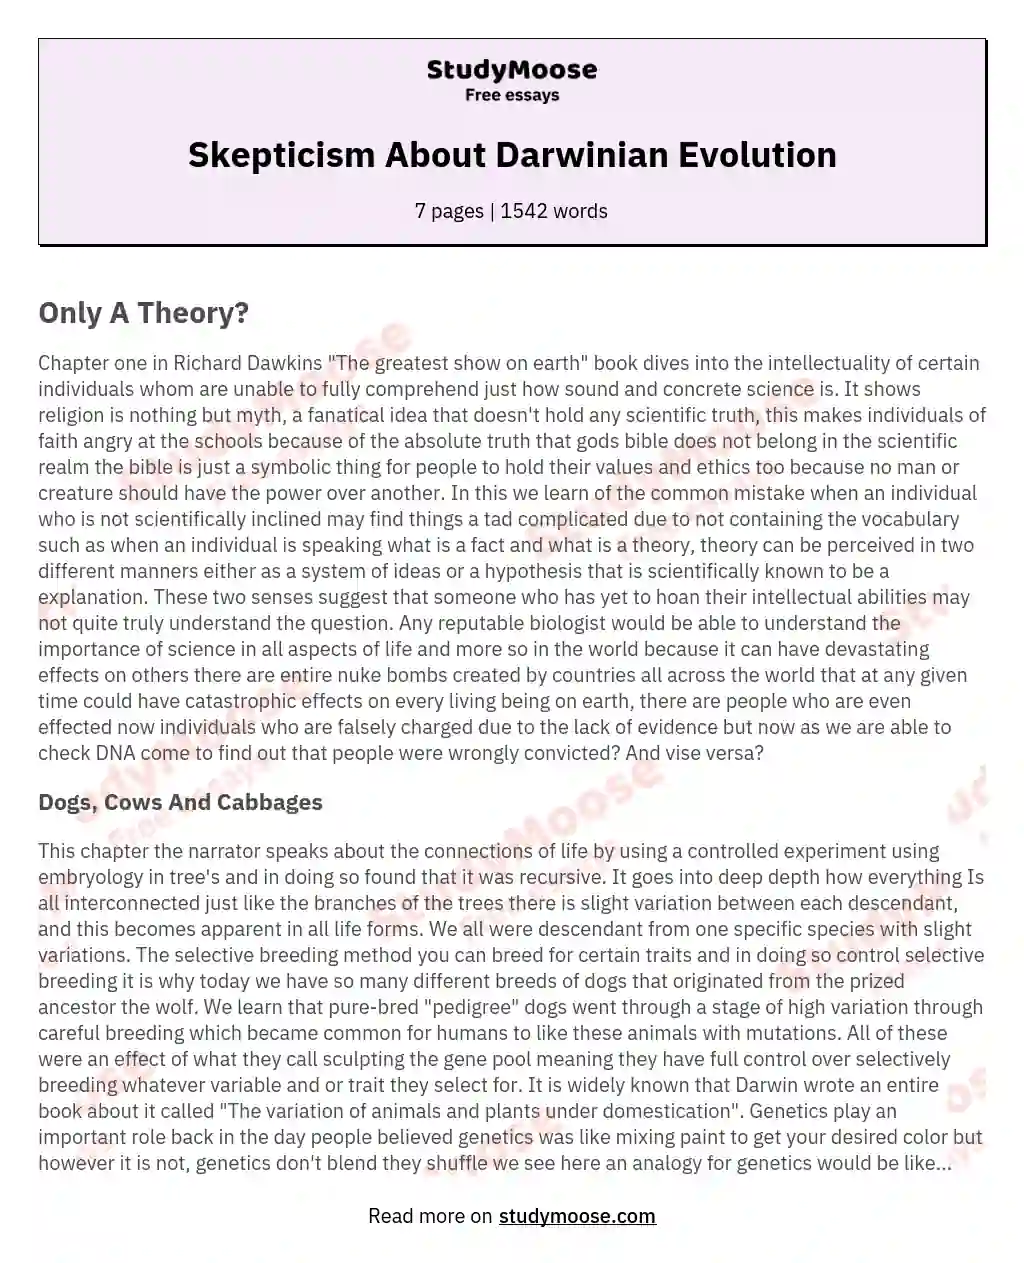 Skepticism About Darwinian Evolution essay